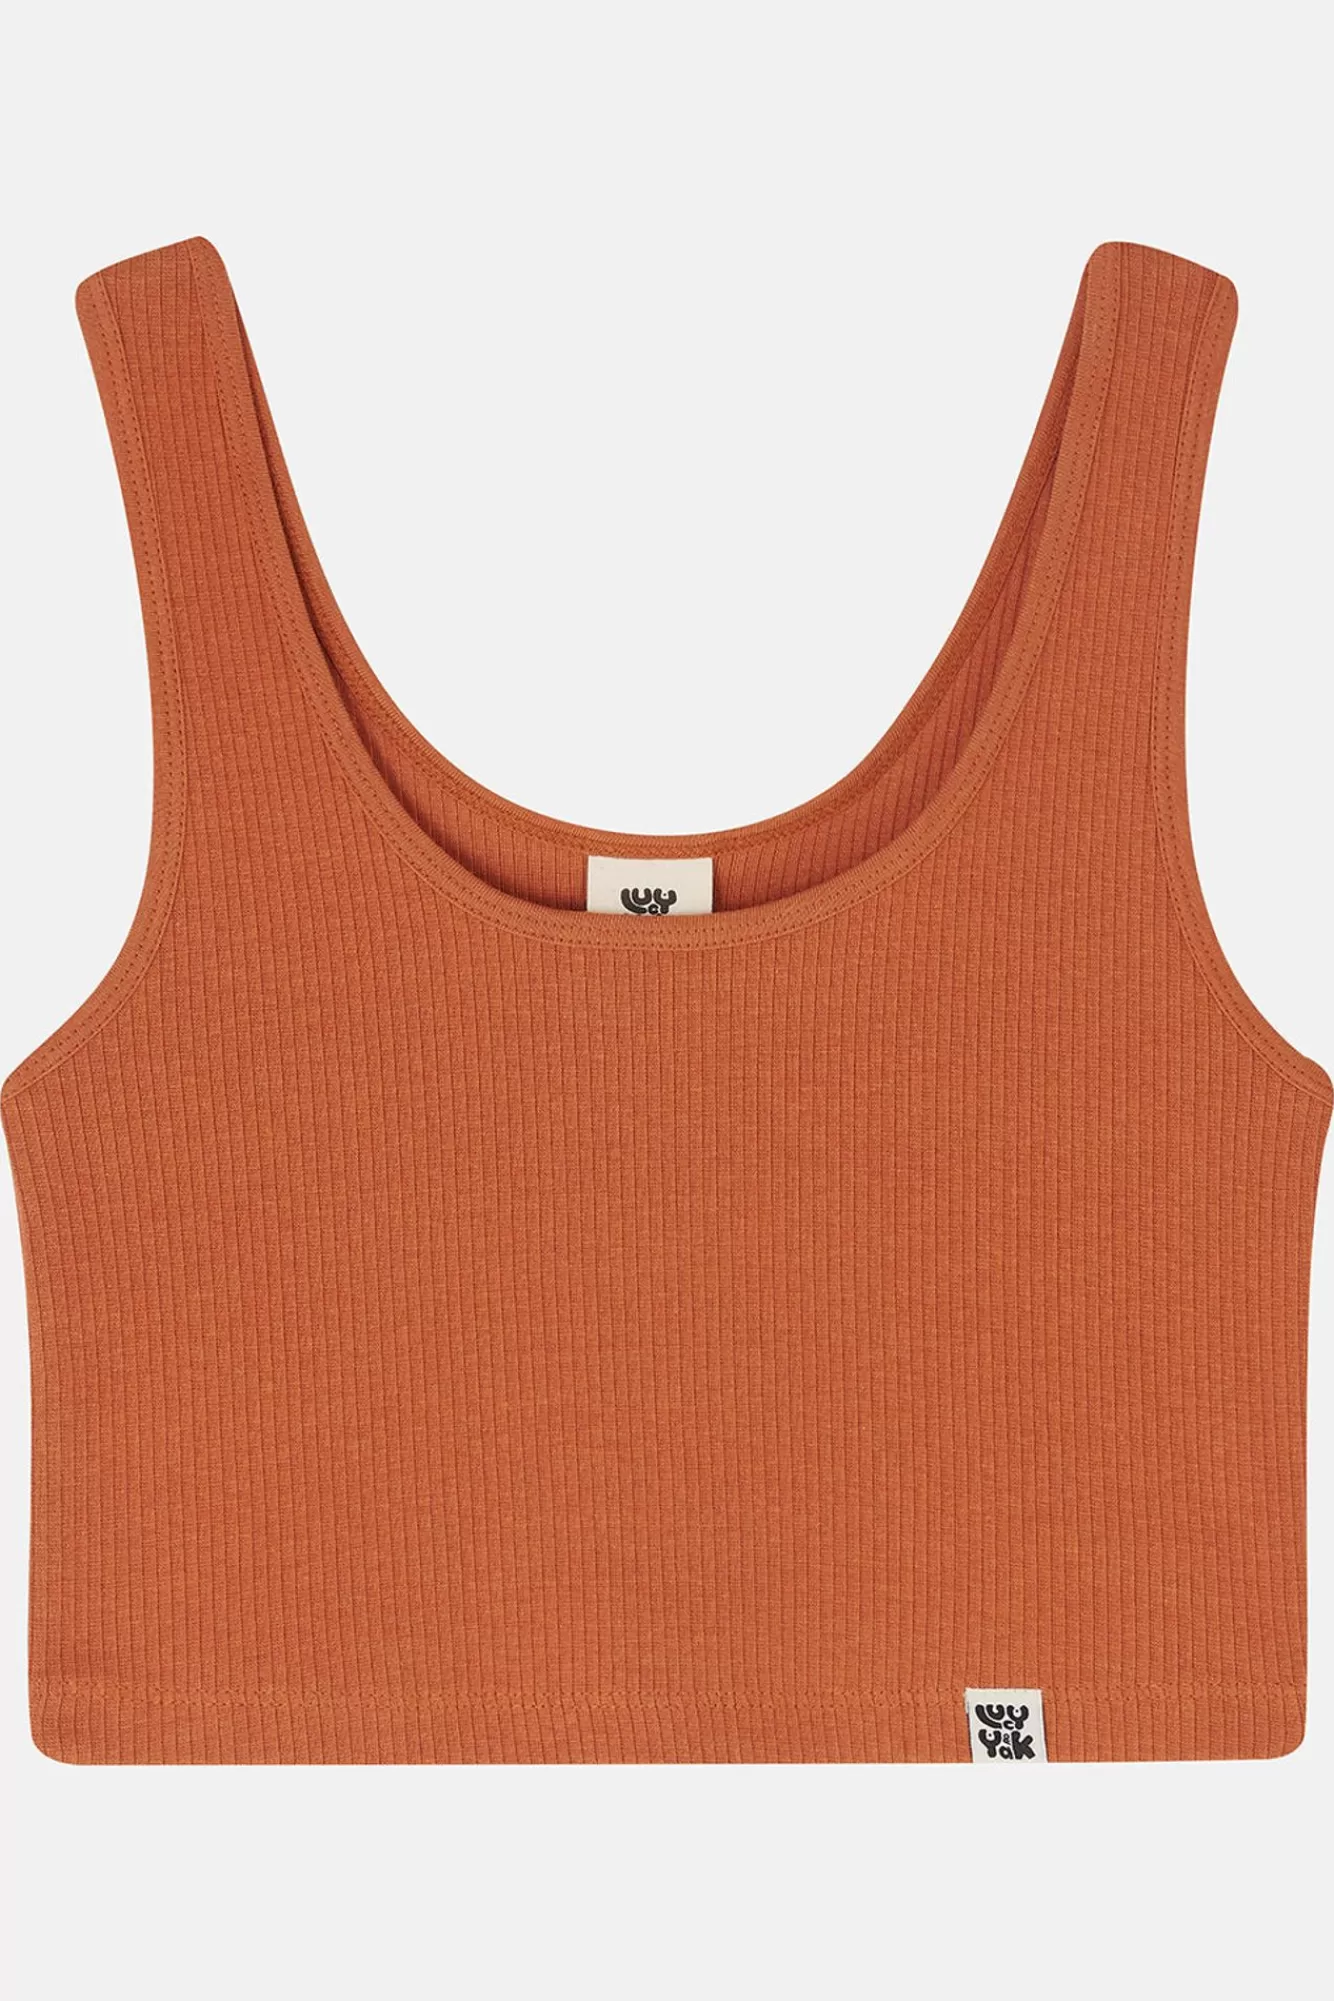 Josy Vest Top: Organic Cotton & Lenzing™ Ecovero™ - Terracotta-Lucy & Yak Outlet